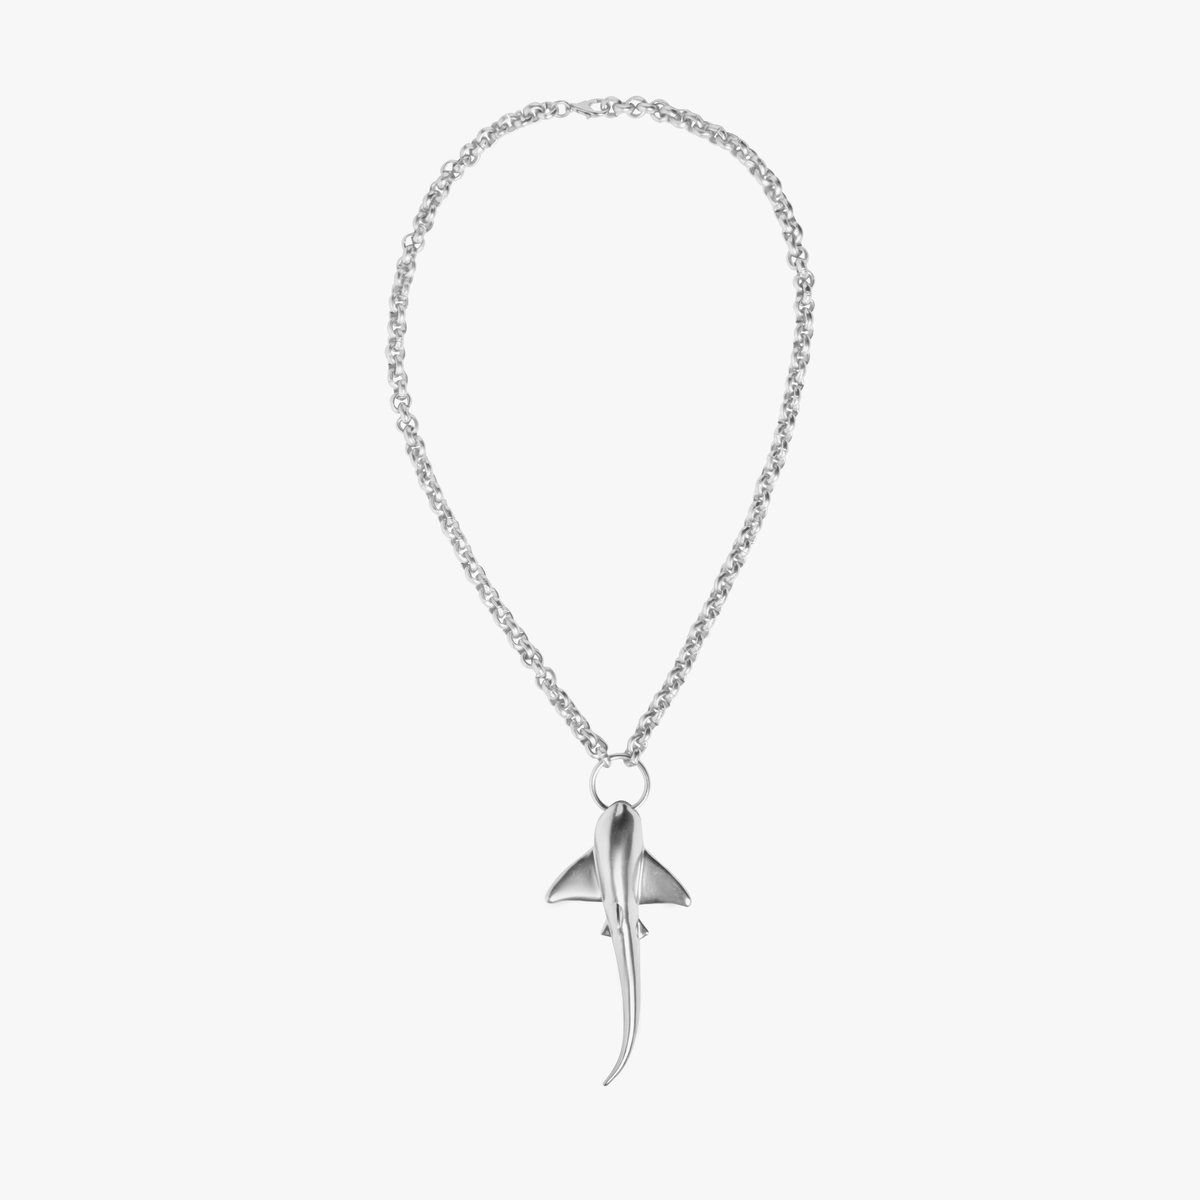 Shark Necklace - Silver Tone